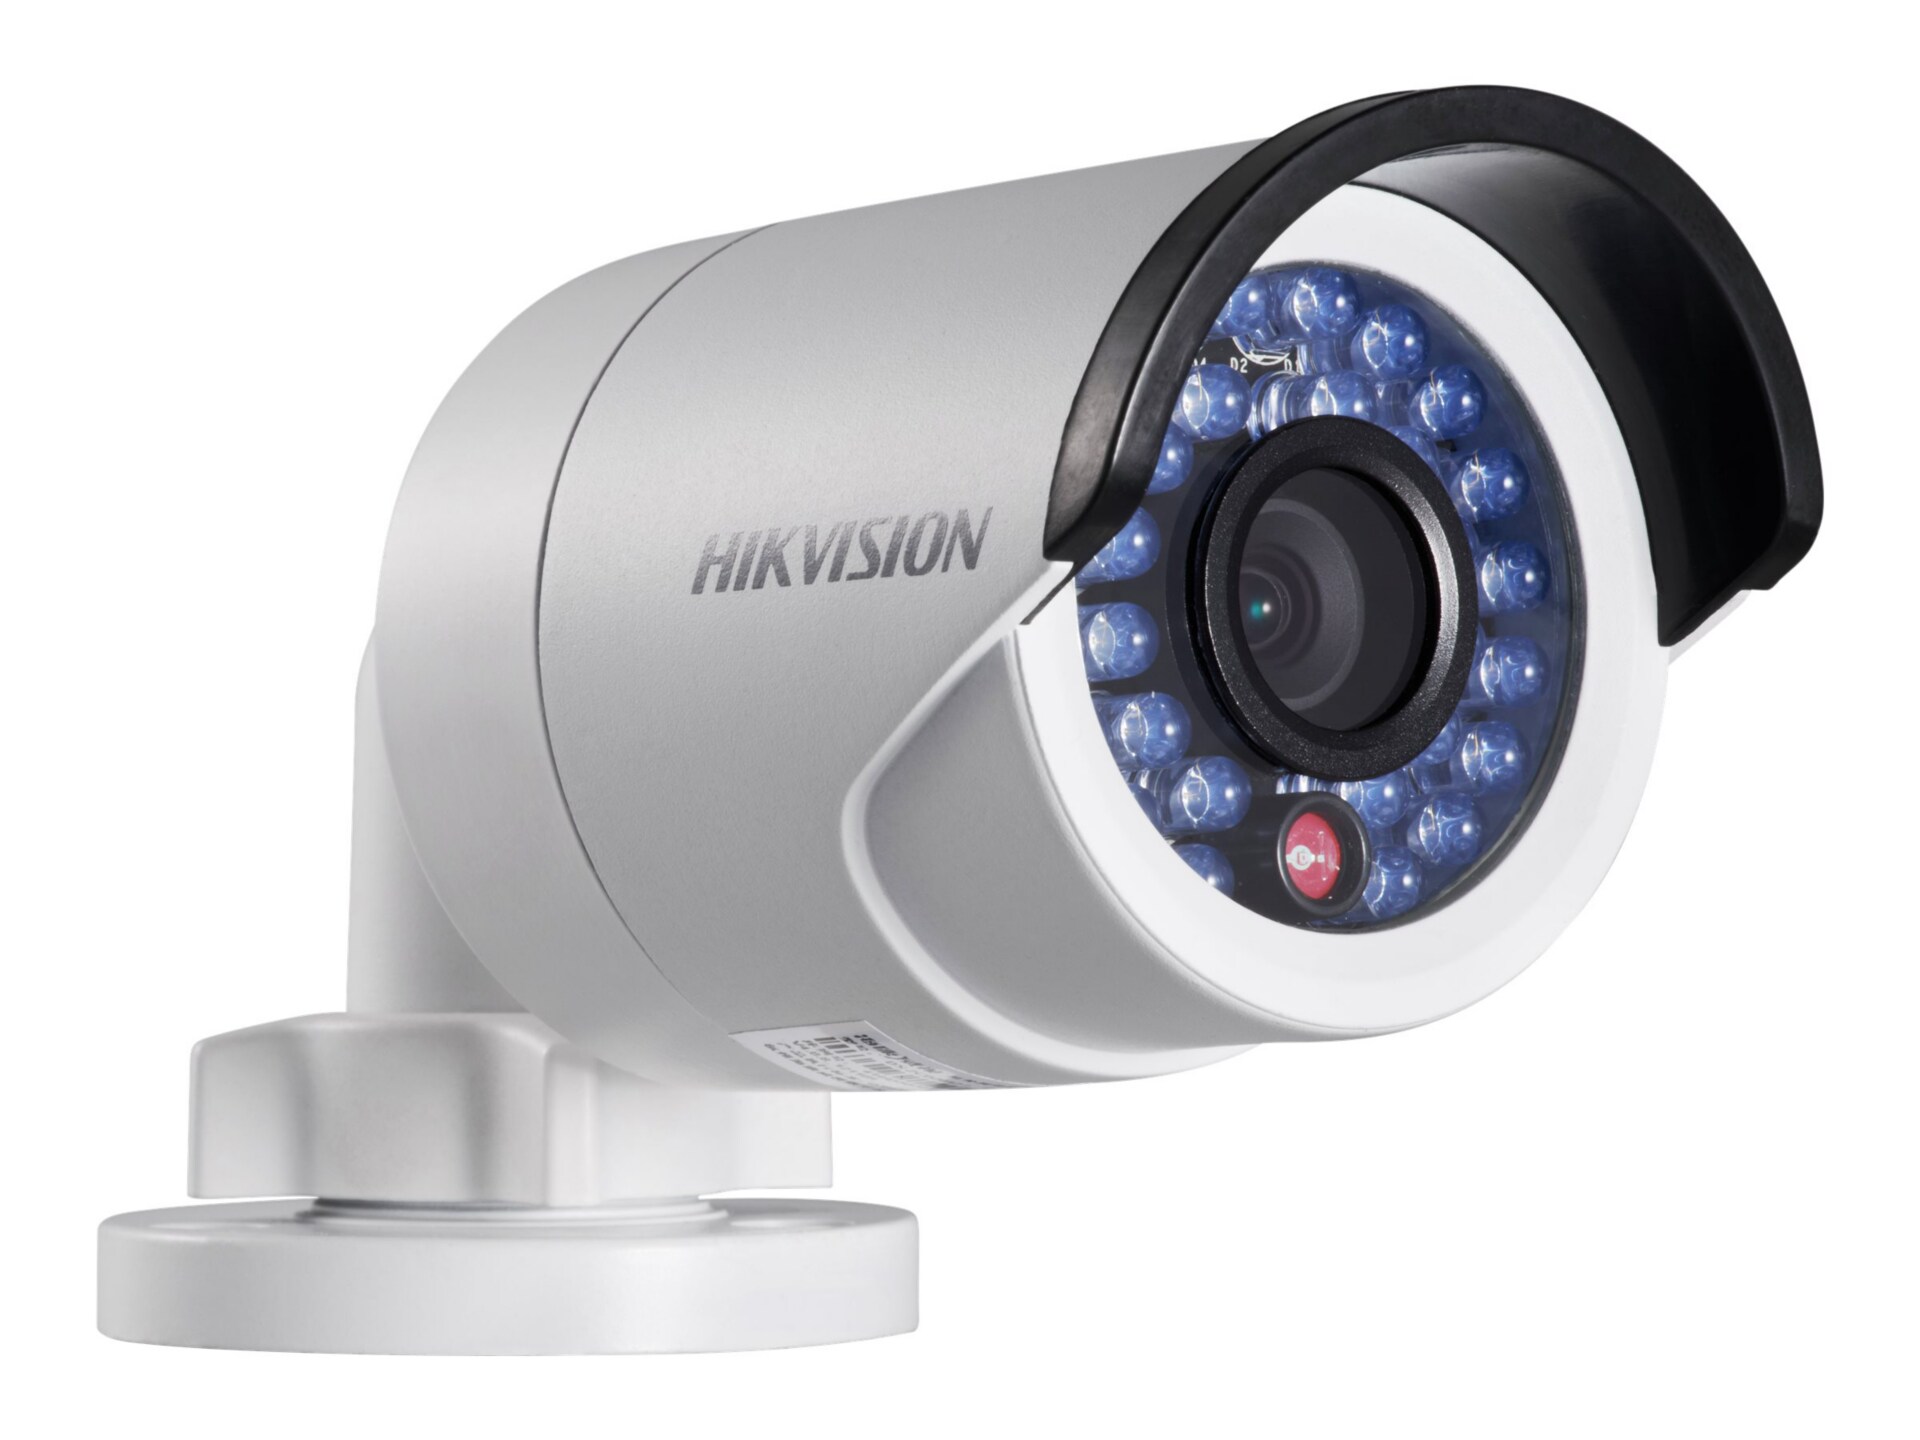 Hikvision DS-2CD2032-I - network surveillance camera